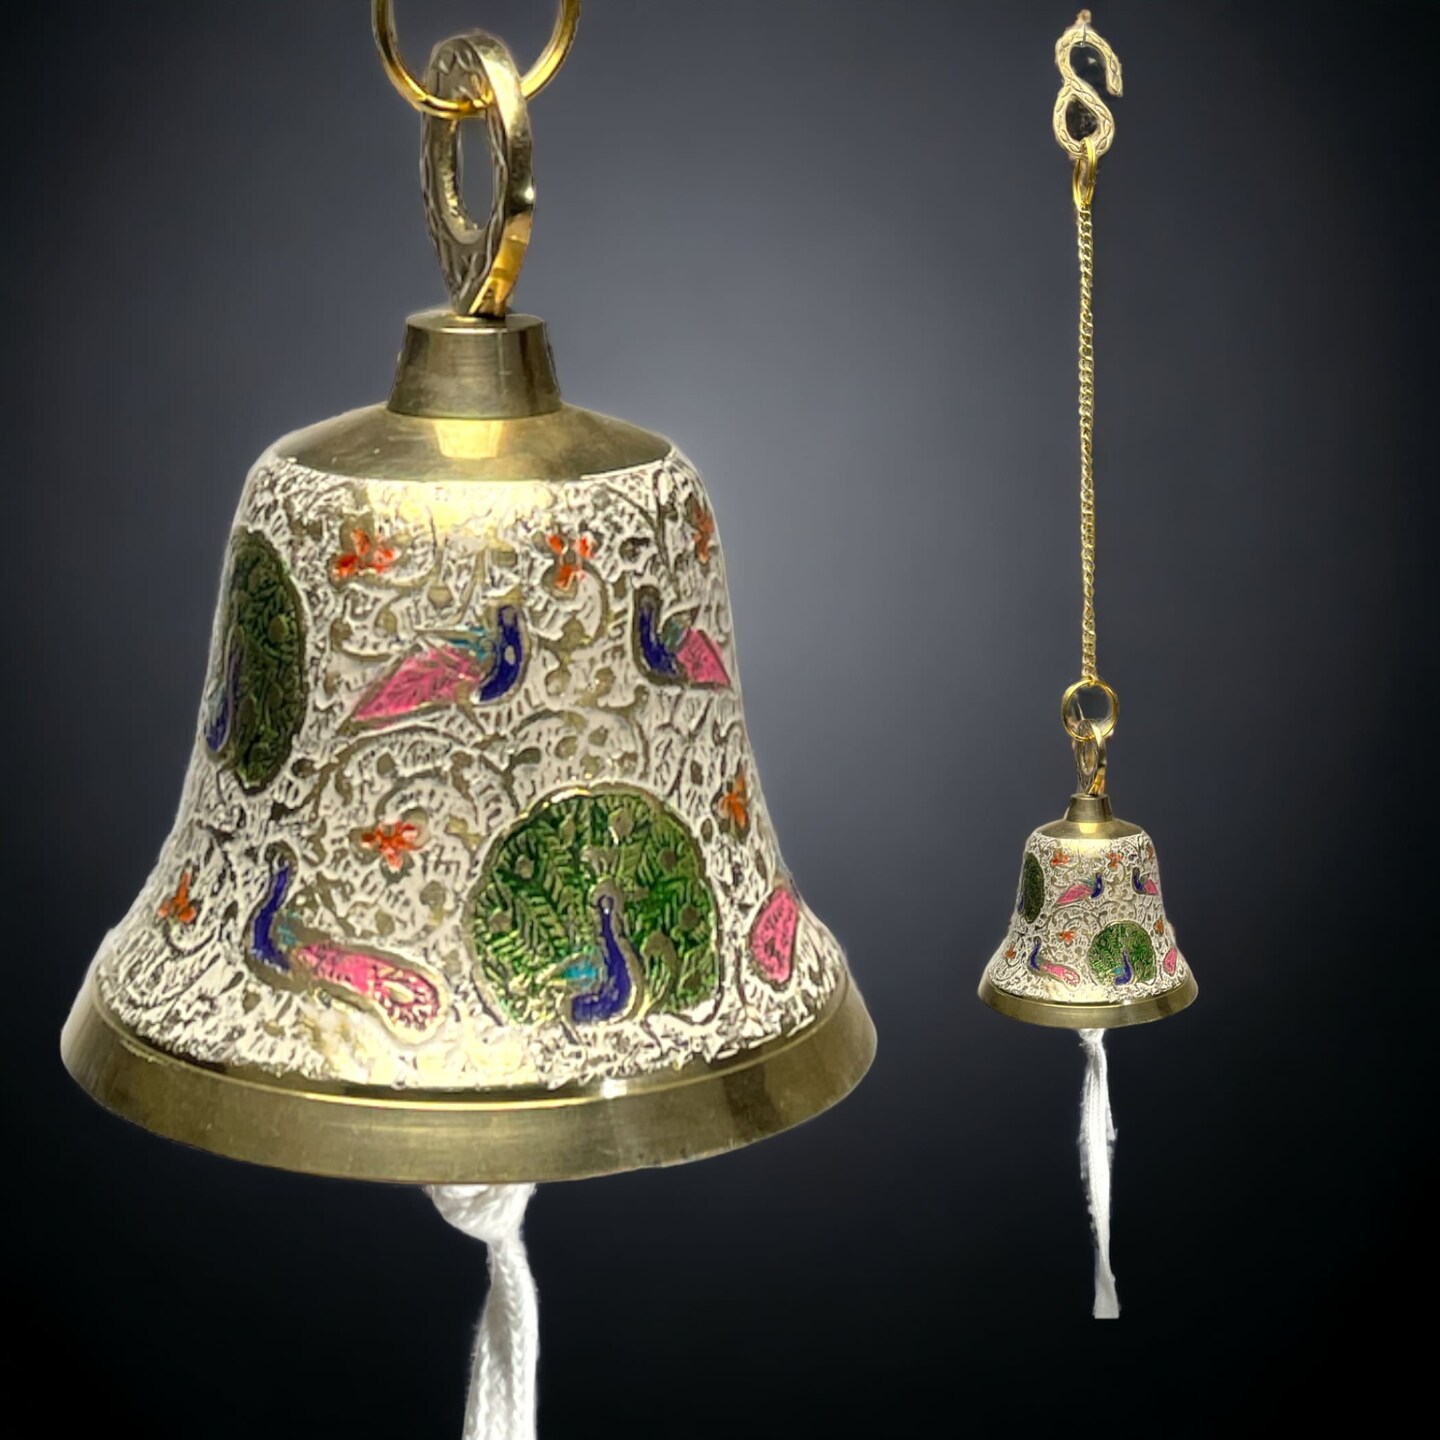 Hanging Brass Bell, Ganti, Indian Pooja, Brass Bell, Puja Ghanti, Pooja Ghanti, Hindu Temple Bell, Indian Decor, Jingle, Diwali Puja, Mandir